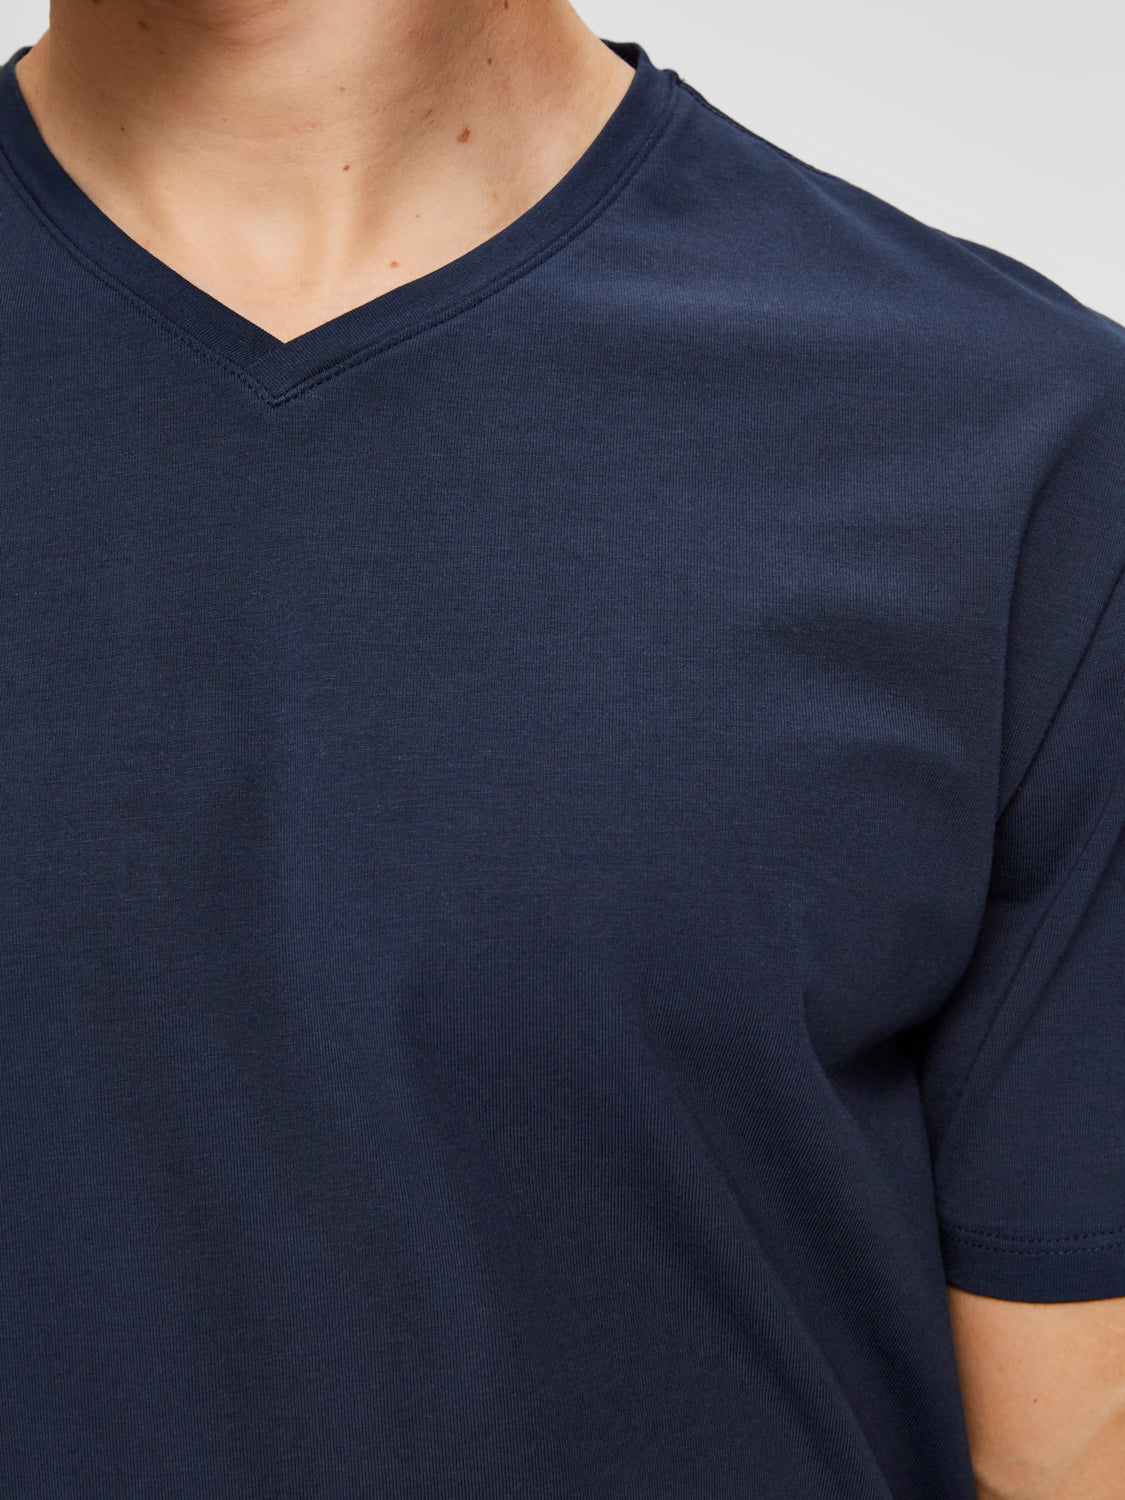 SELECTED HOMME - NEW PIMA V-NECK T-Shirt - Navy Blazer